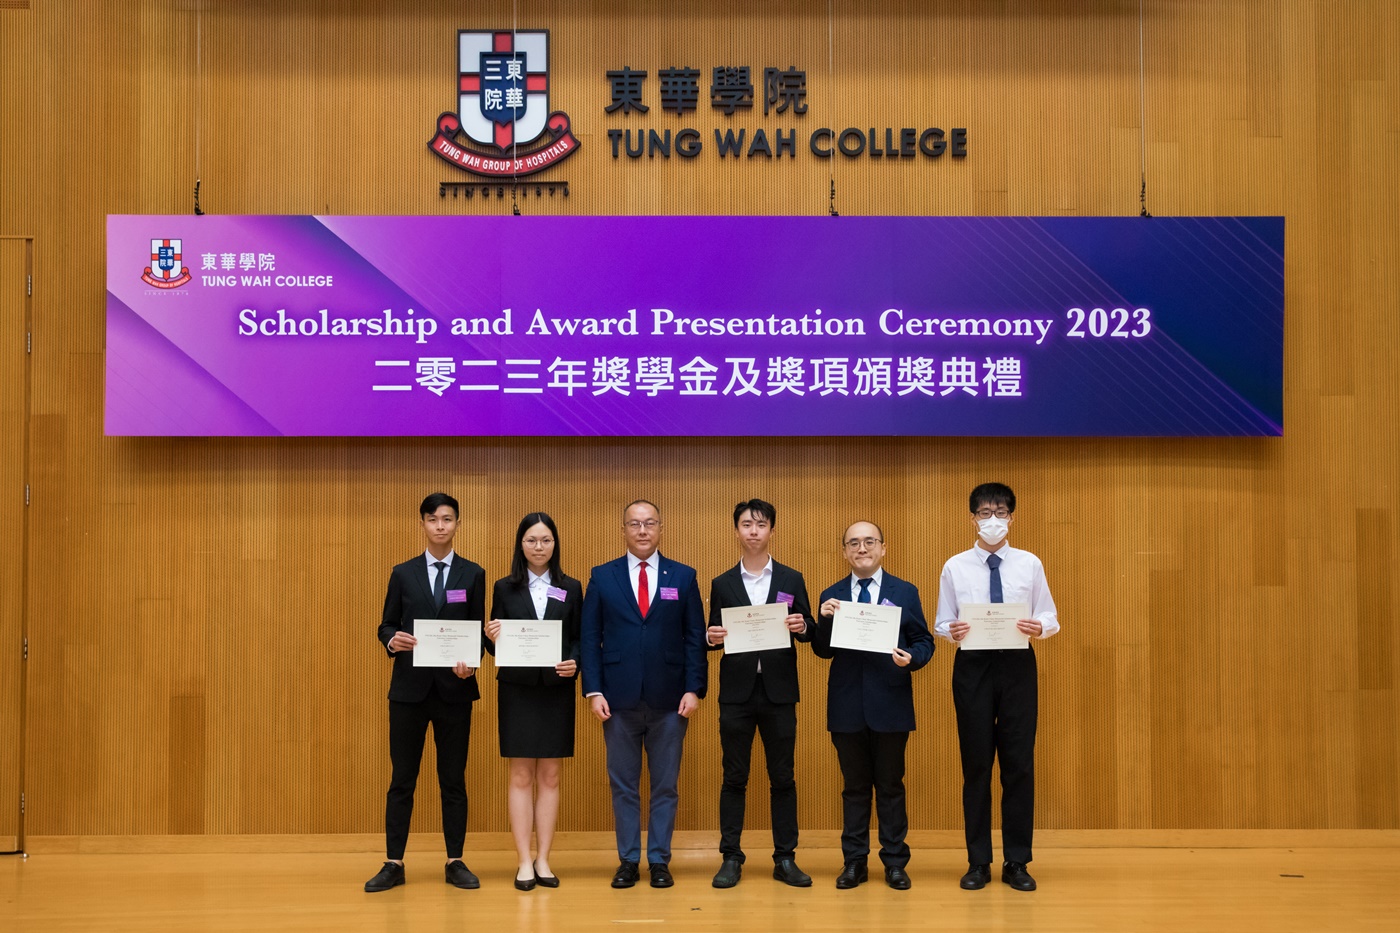 Scholarship and Award Presentation Ceremony 2023